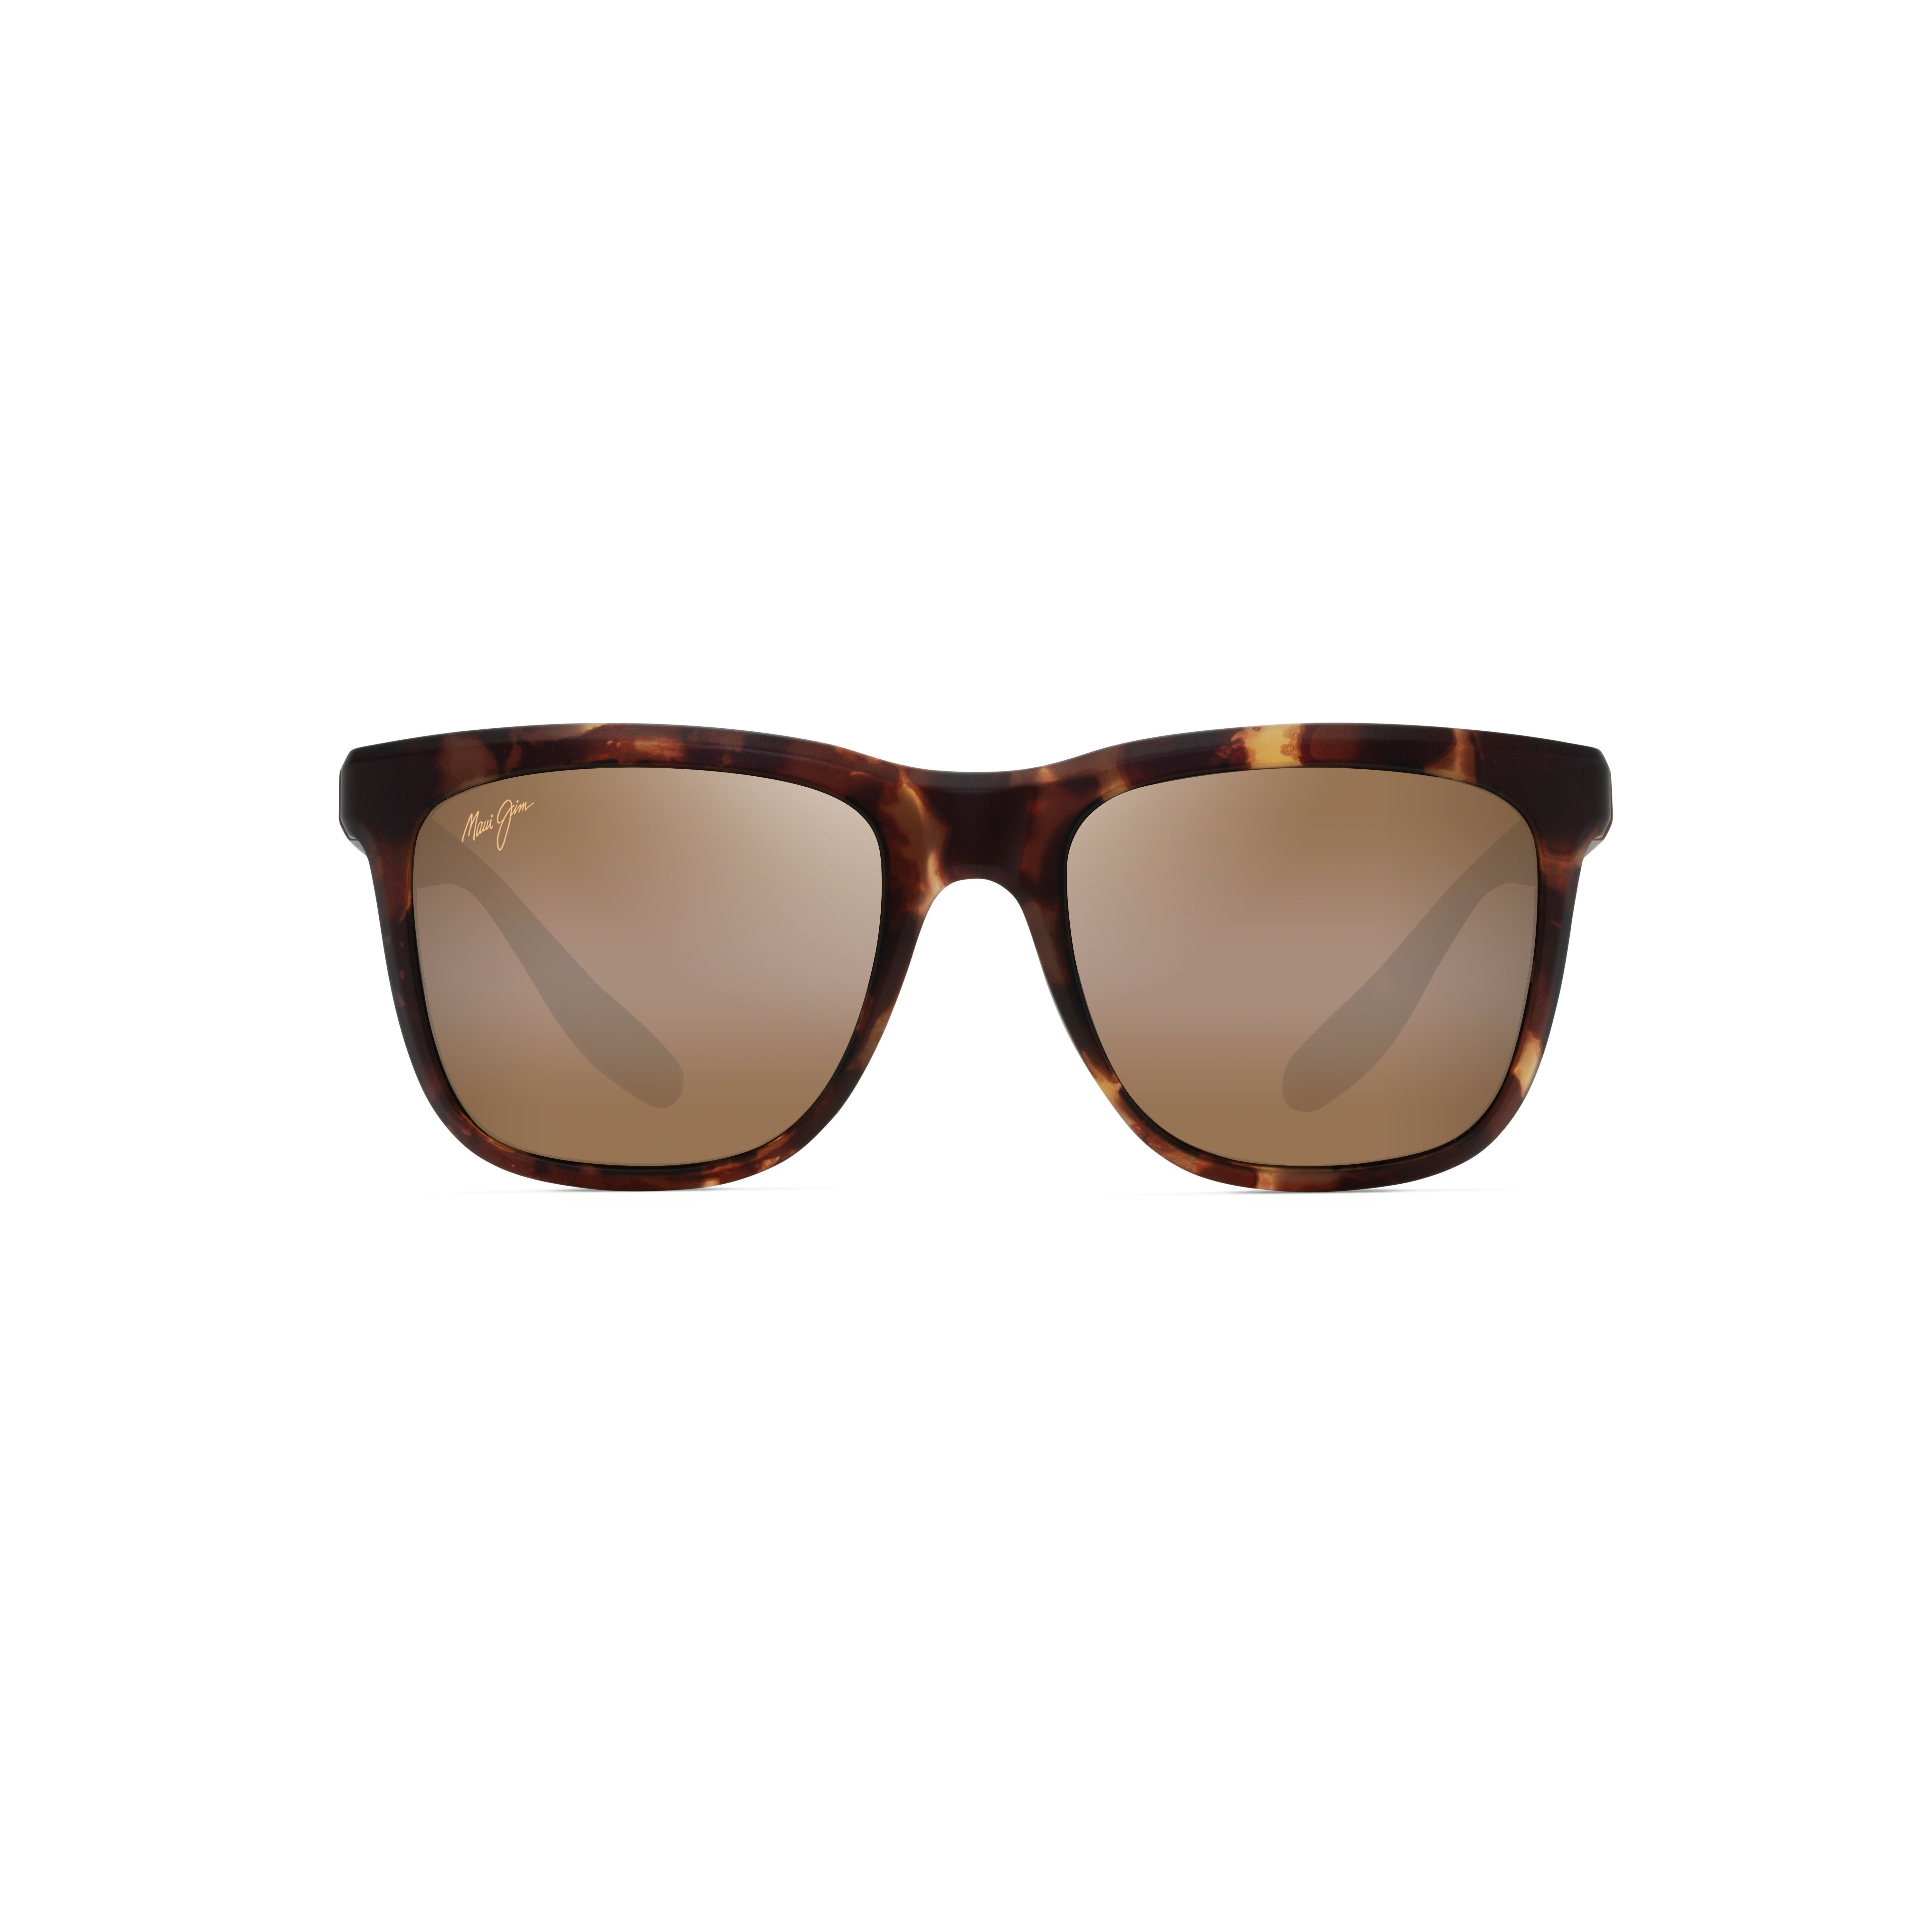 PEHU Square Sunglasses H602-10 - size 55